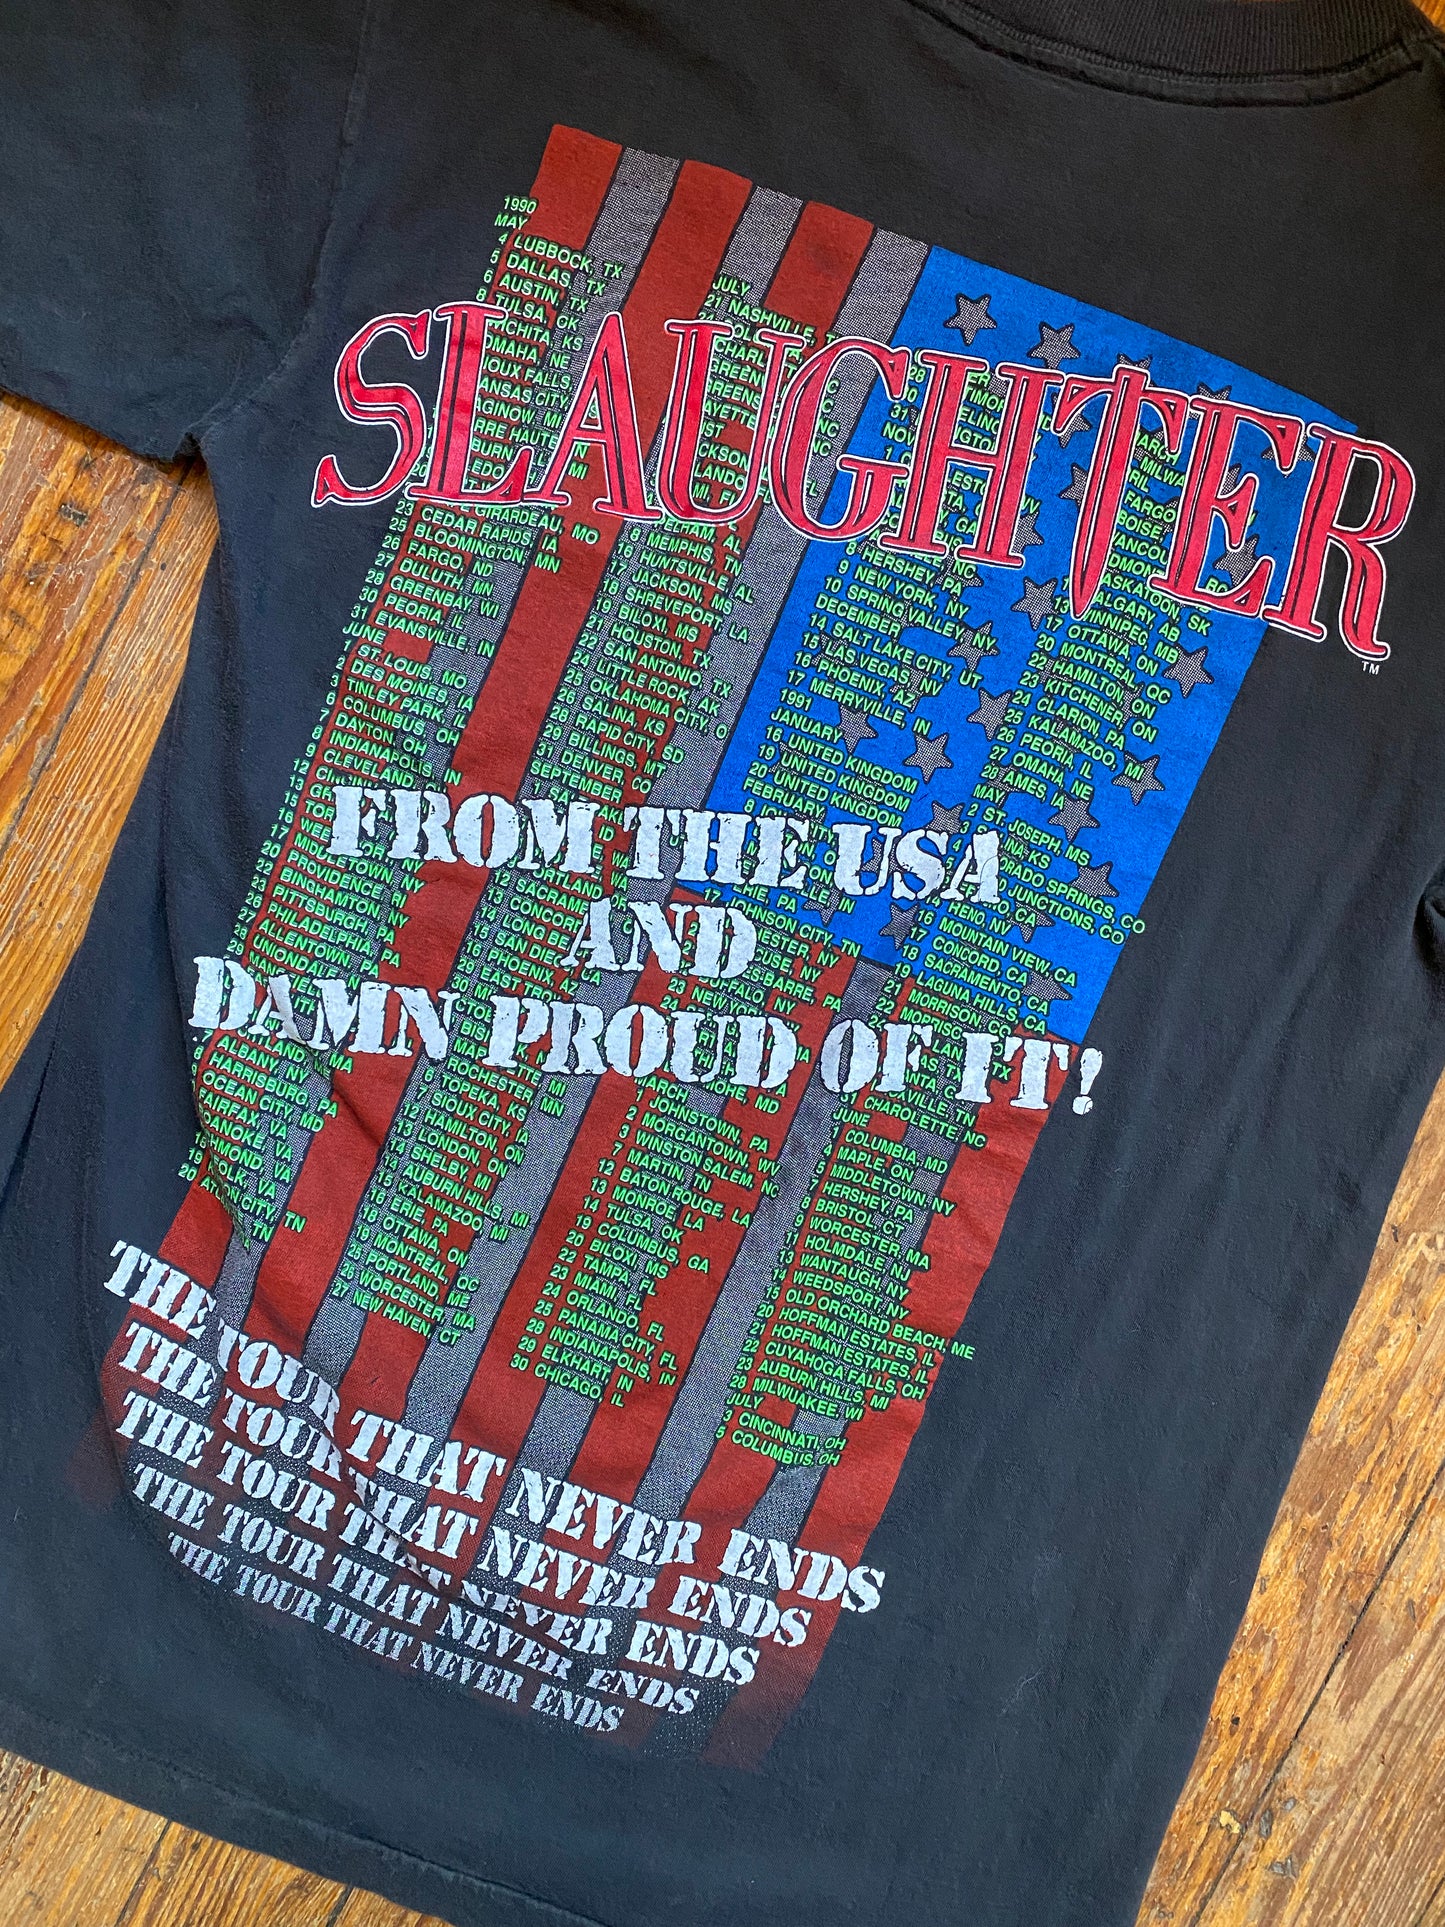 Vintage 1991 Slaughter “The Tour That Never Ends” Tour Shirt